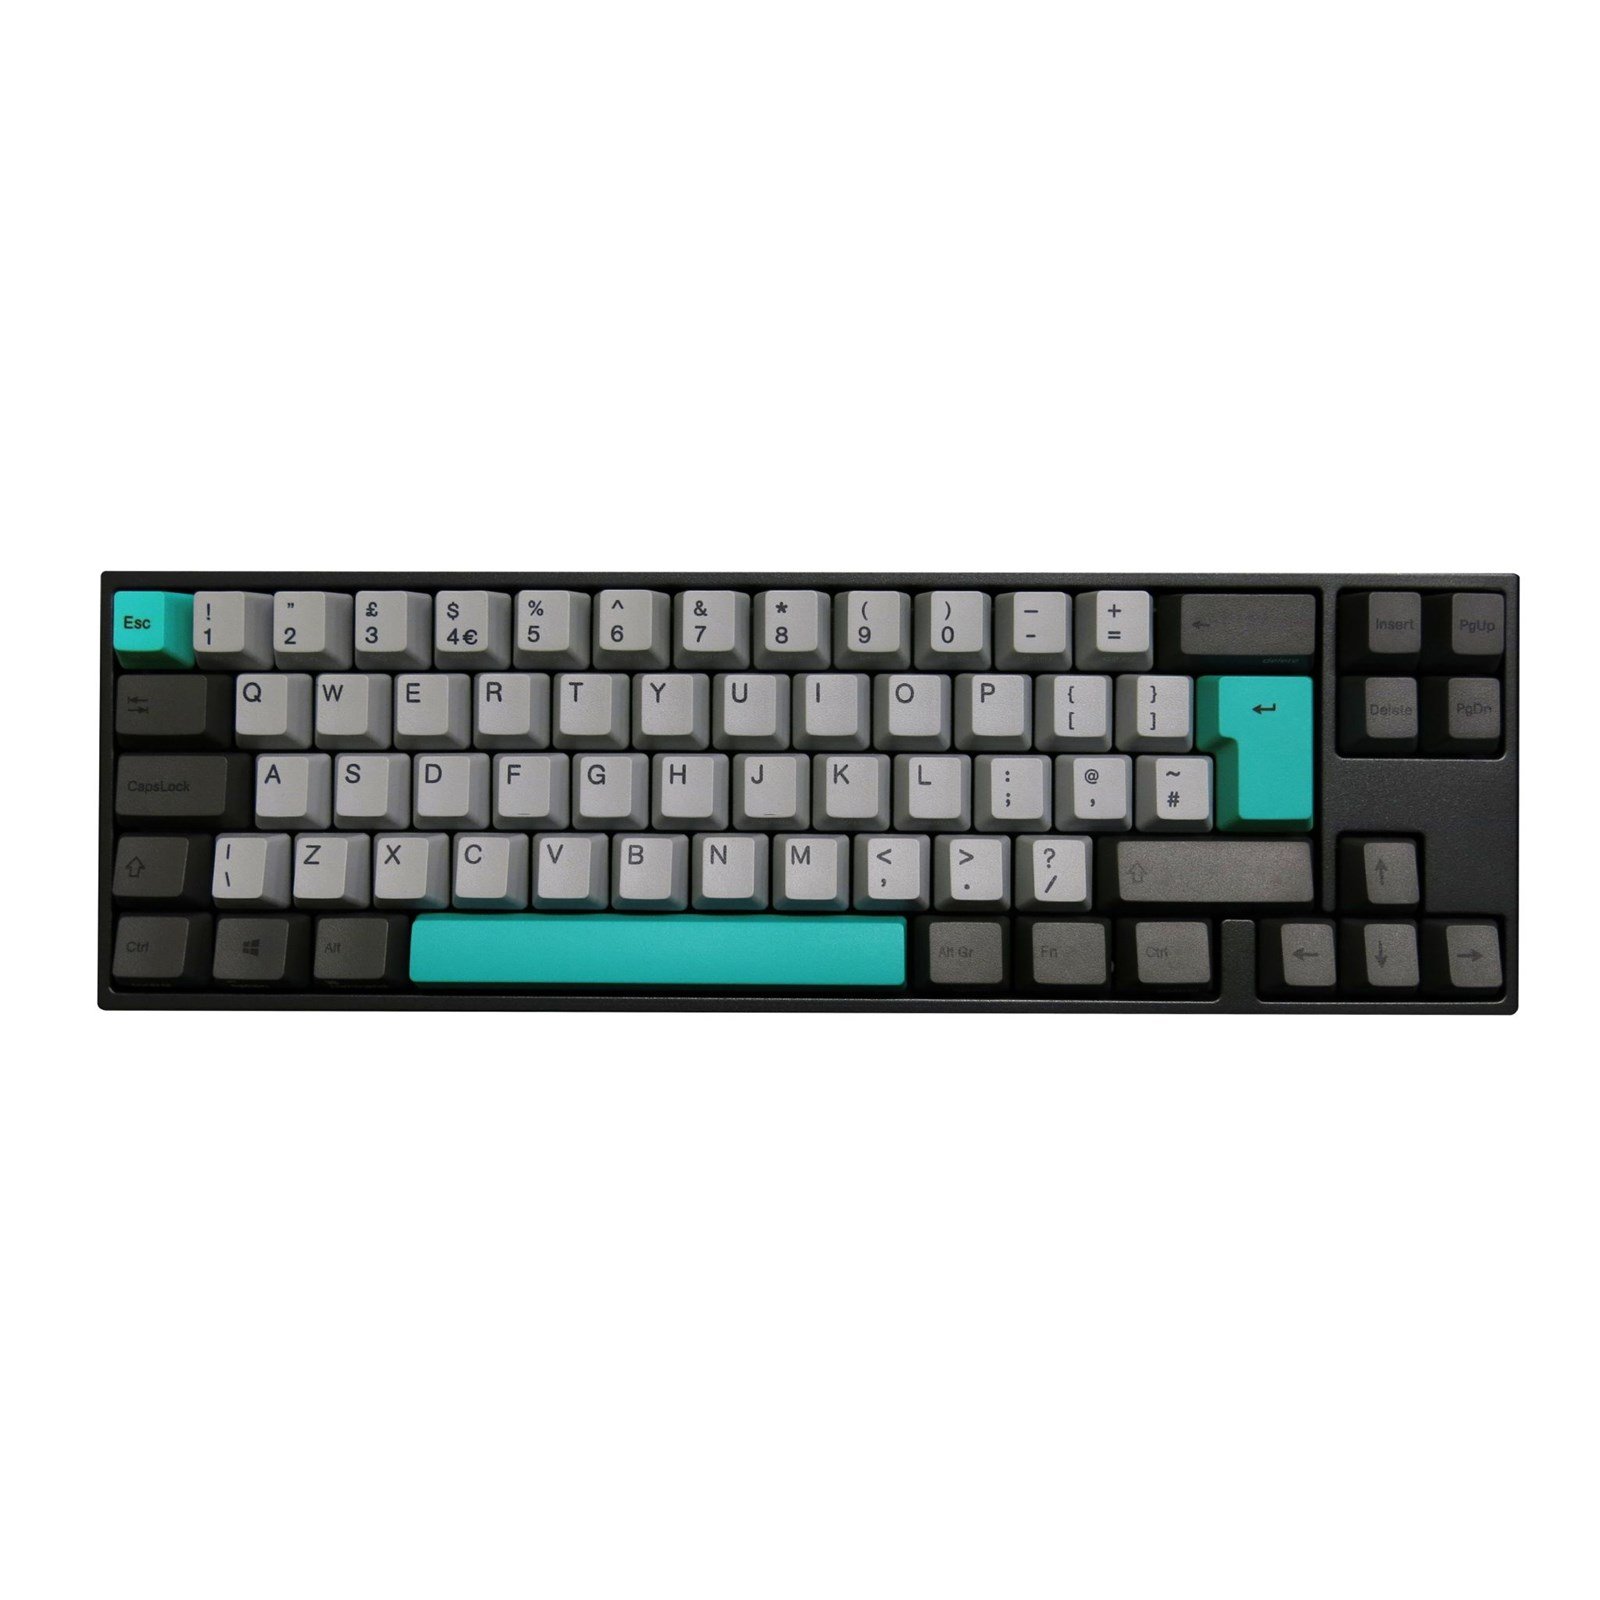 Ducky MIYA Pro Moonlight 65% USB Mechanical Keyboard in Black with